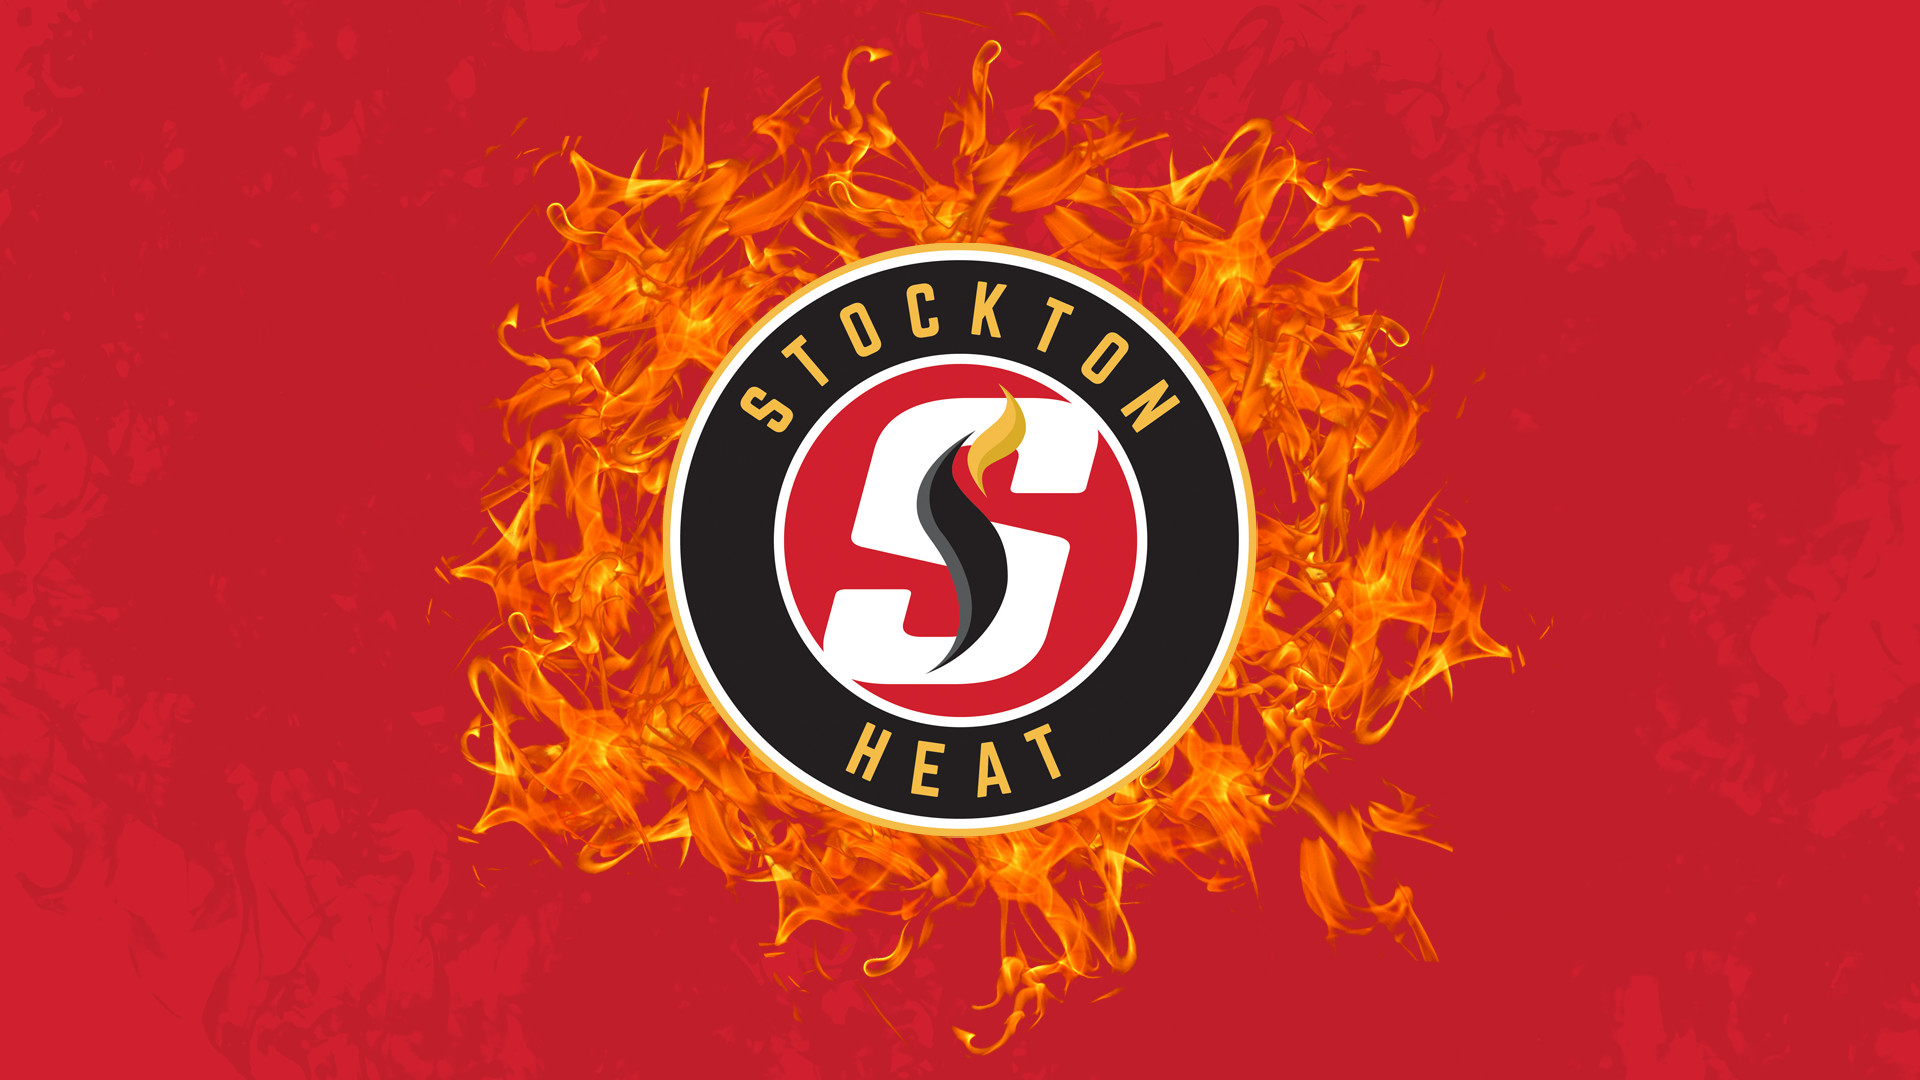 1920x1080 Stockton Heat Logo Wallpaper